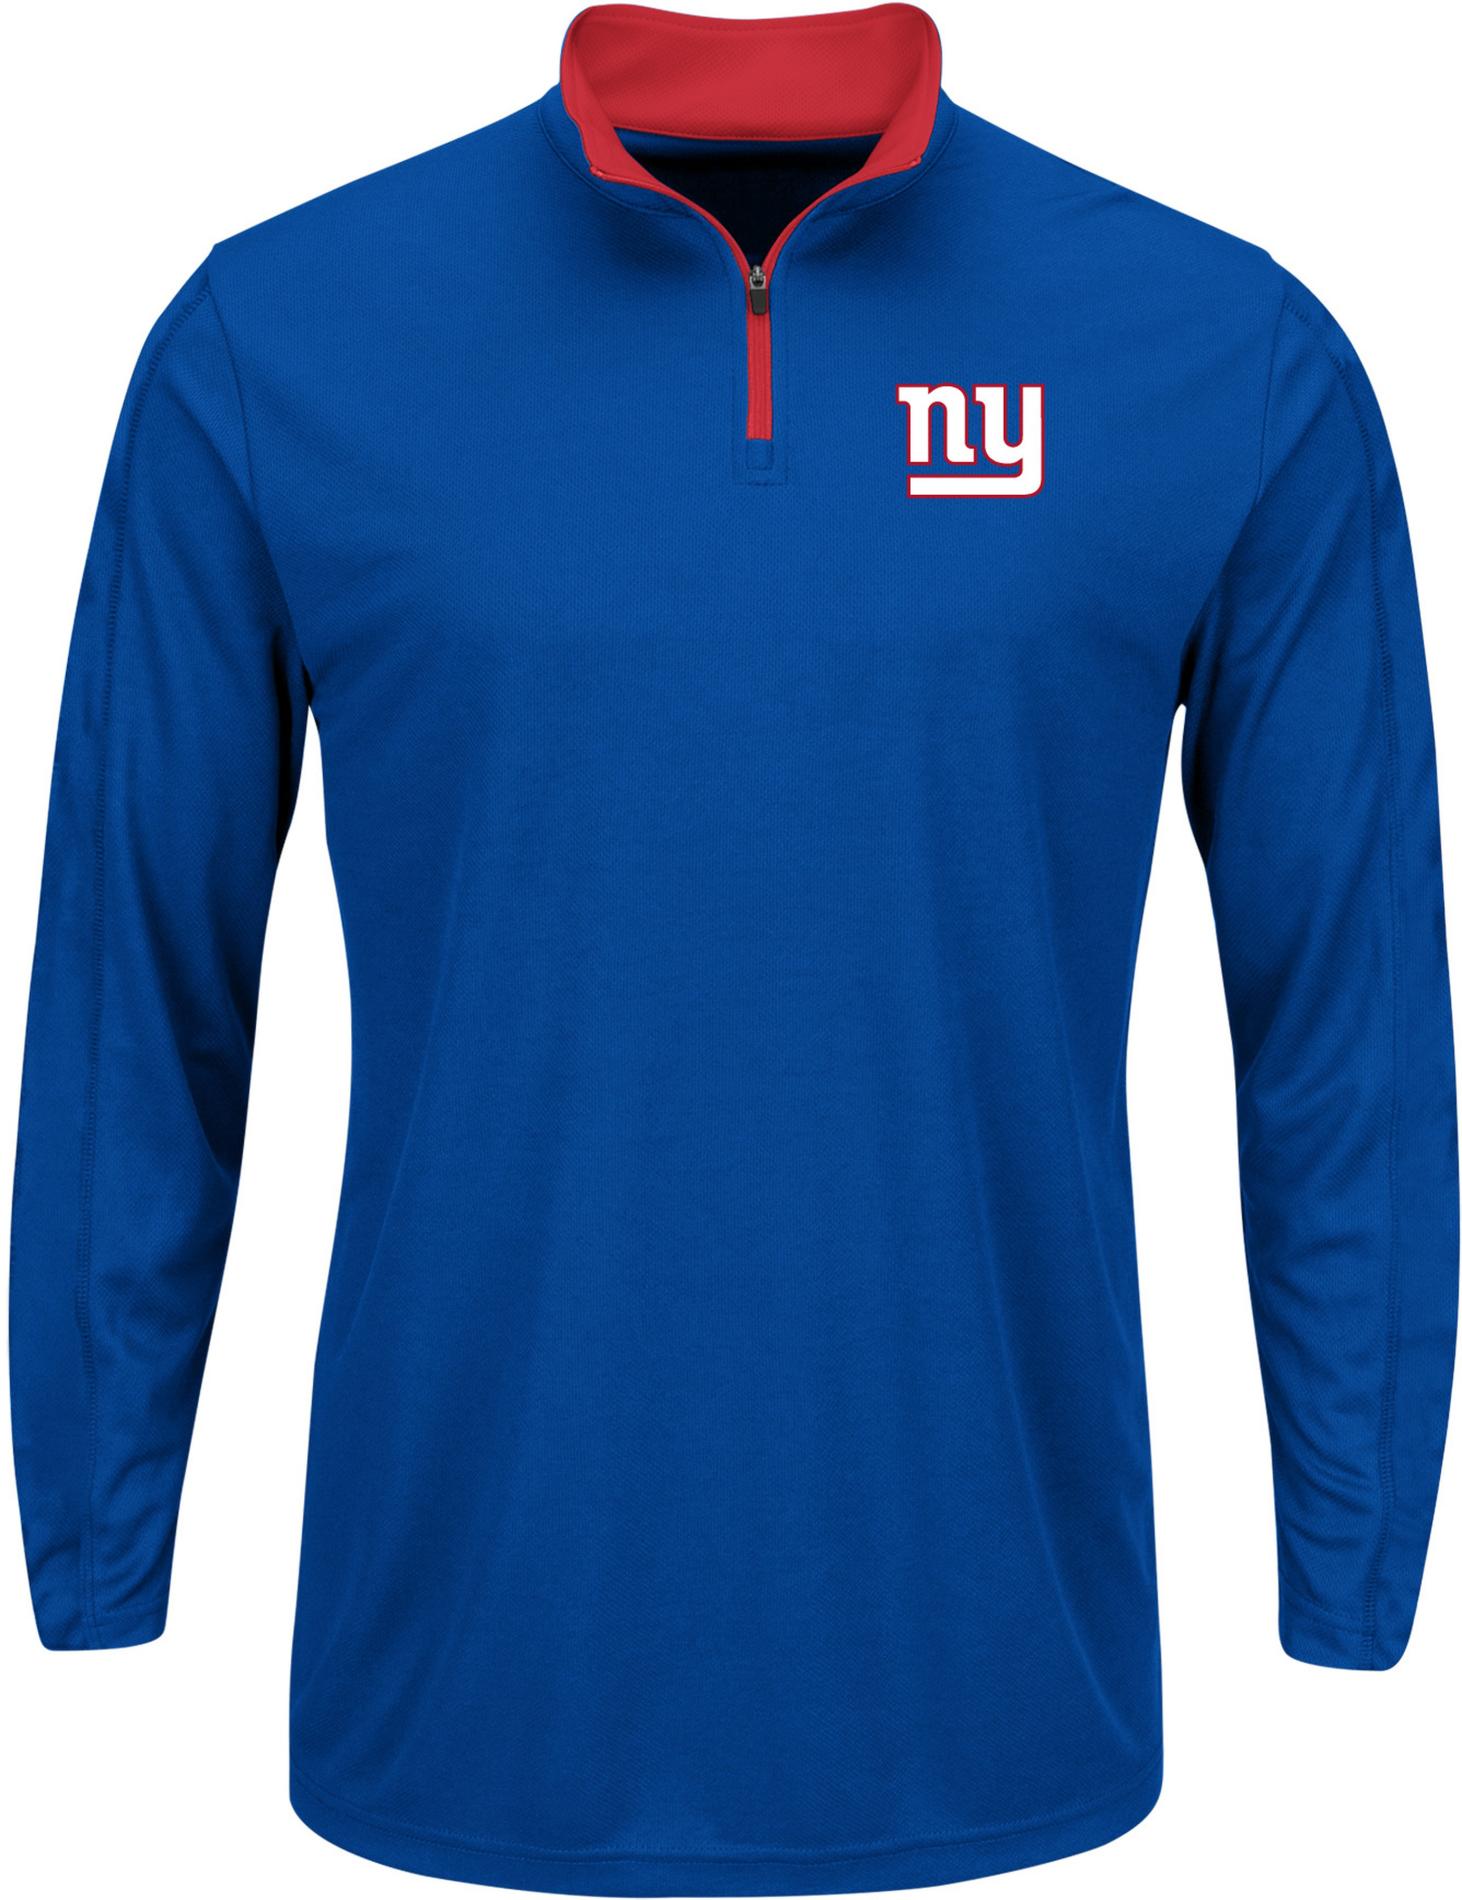 NFL Men's Quarter-Zip Shirt - New York Giants